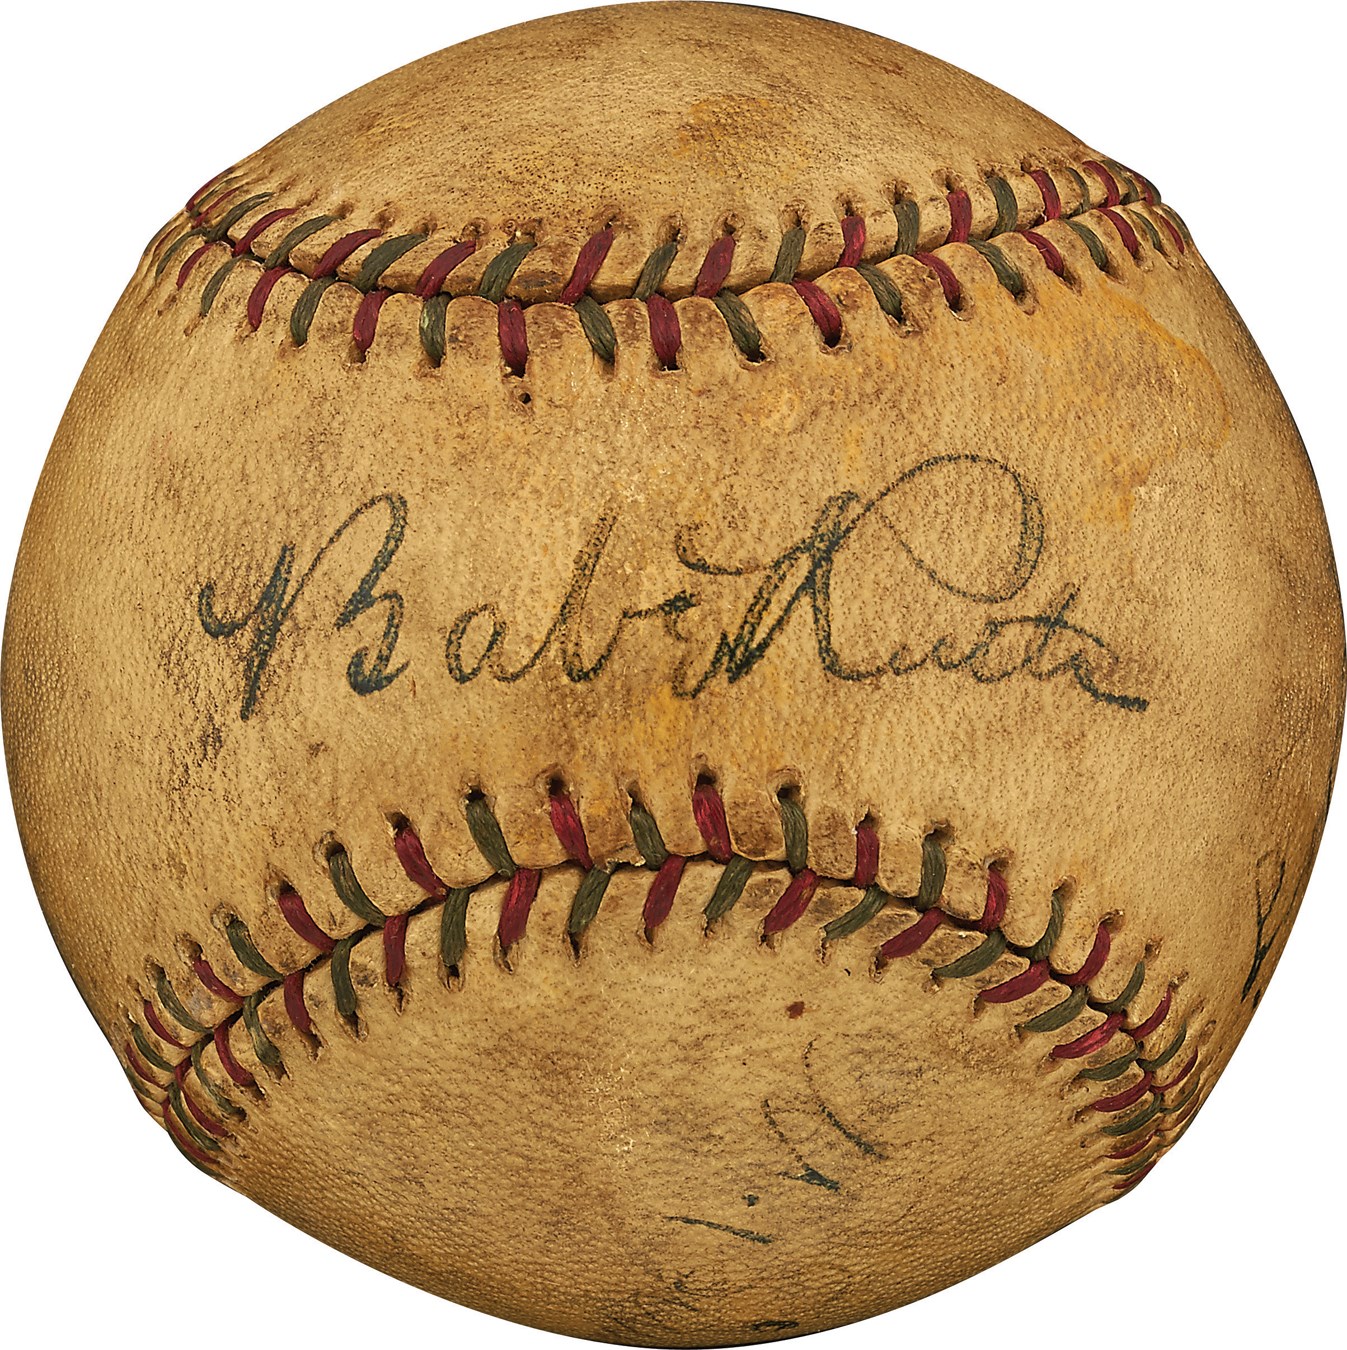 - 1928 Babe Ruth, Lou Gehrig & Al Simmons Signed Baseball (PSA)